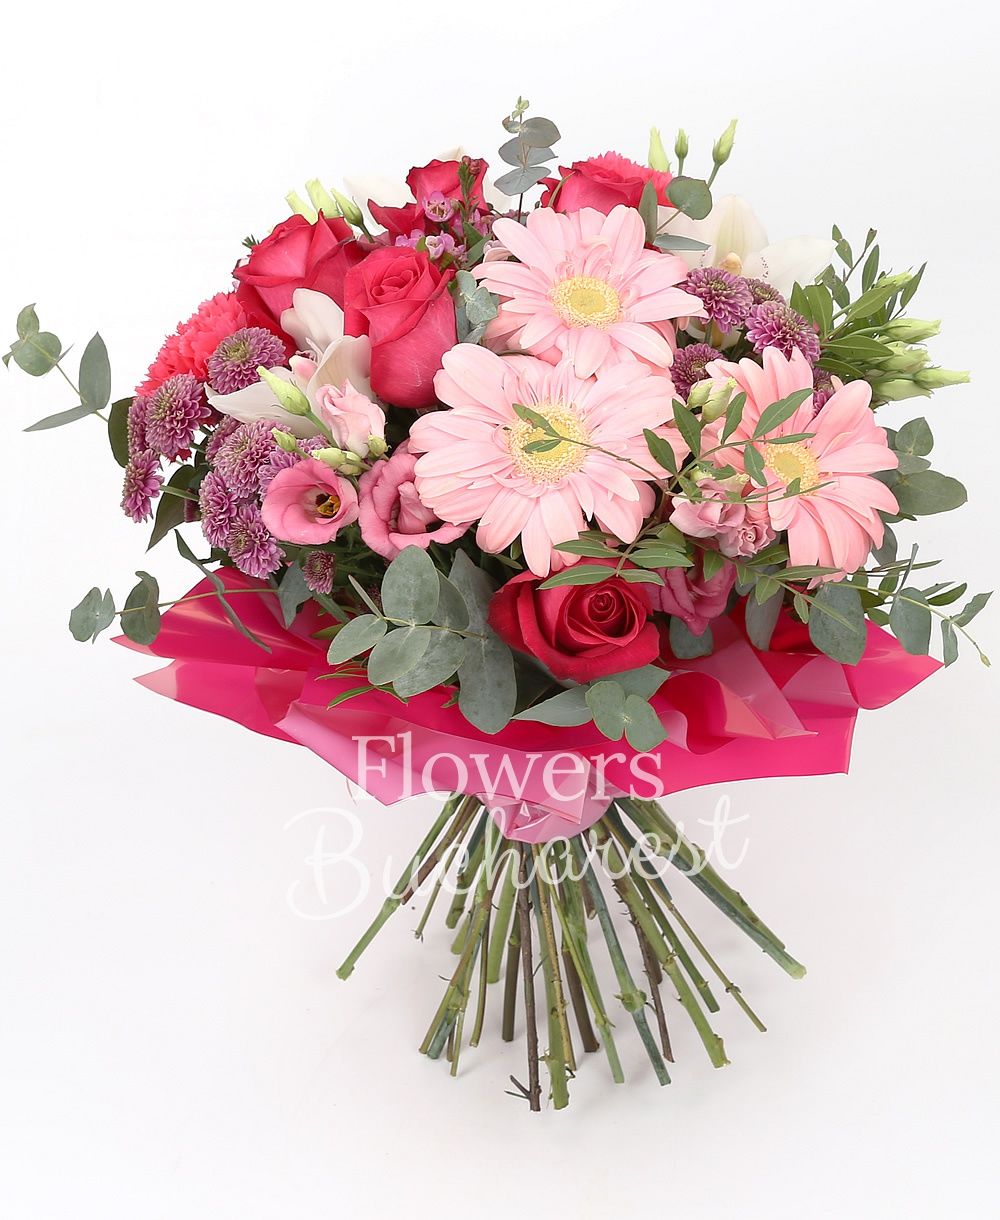 5 cyclam roses, 5 pink gerberas, 5 pink santini, 3 pink lisianthus, 3 cyclam carnations, white cymbidium, greenery